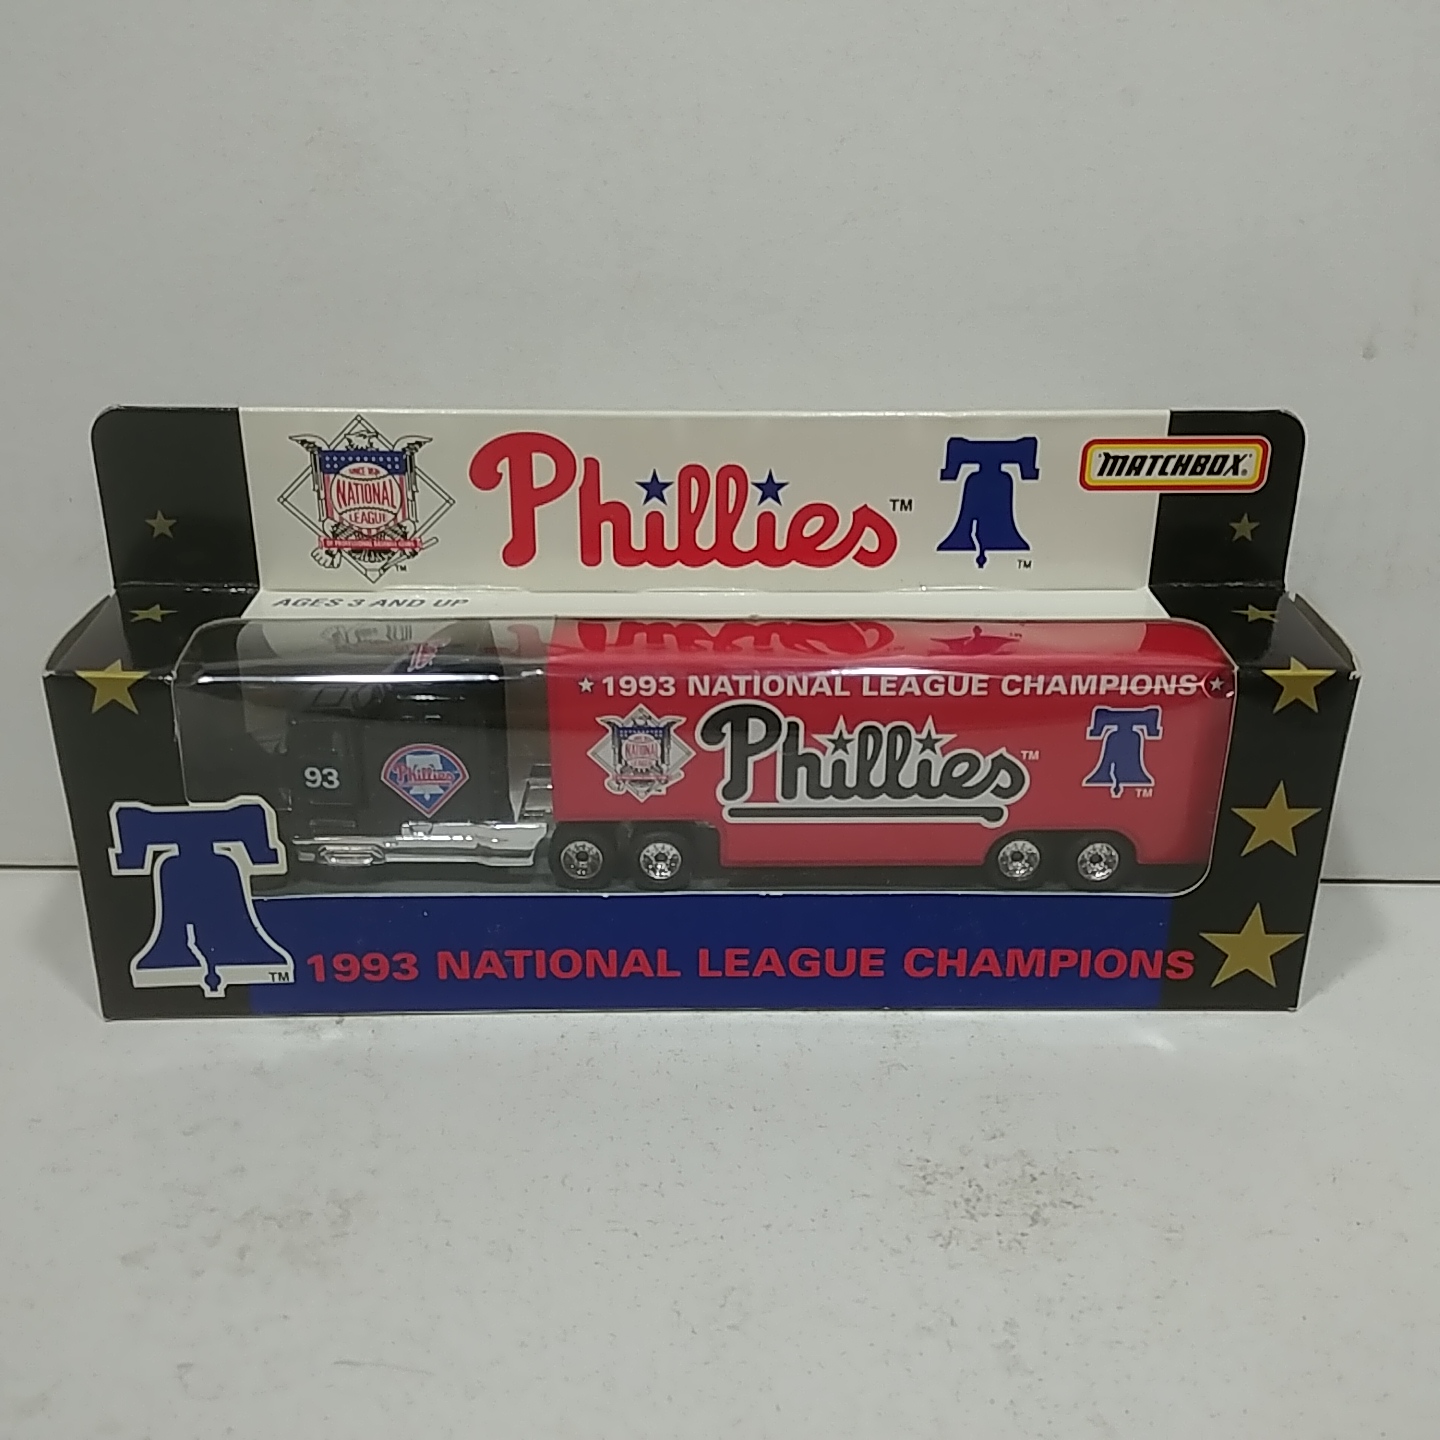 1993 Philadelphia Phillies 1/80th National League Champions transporter